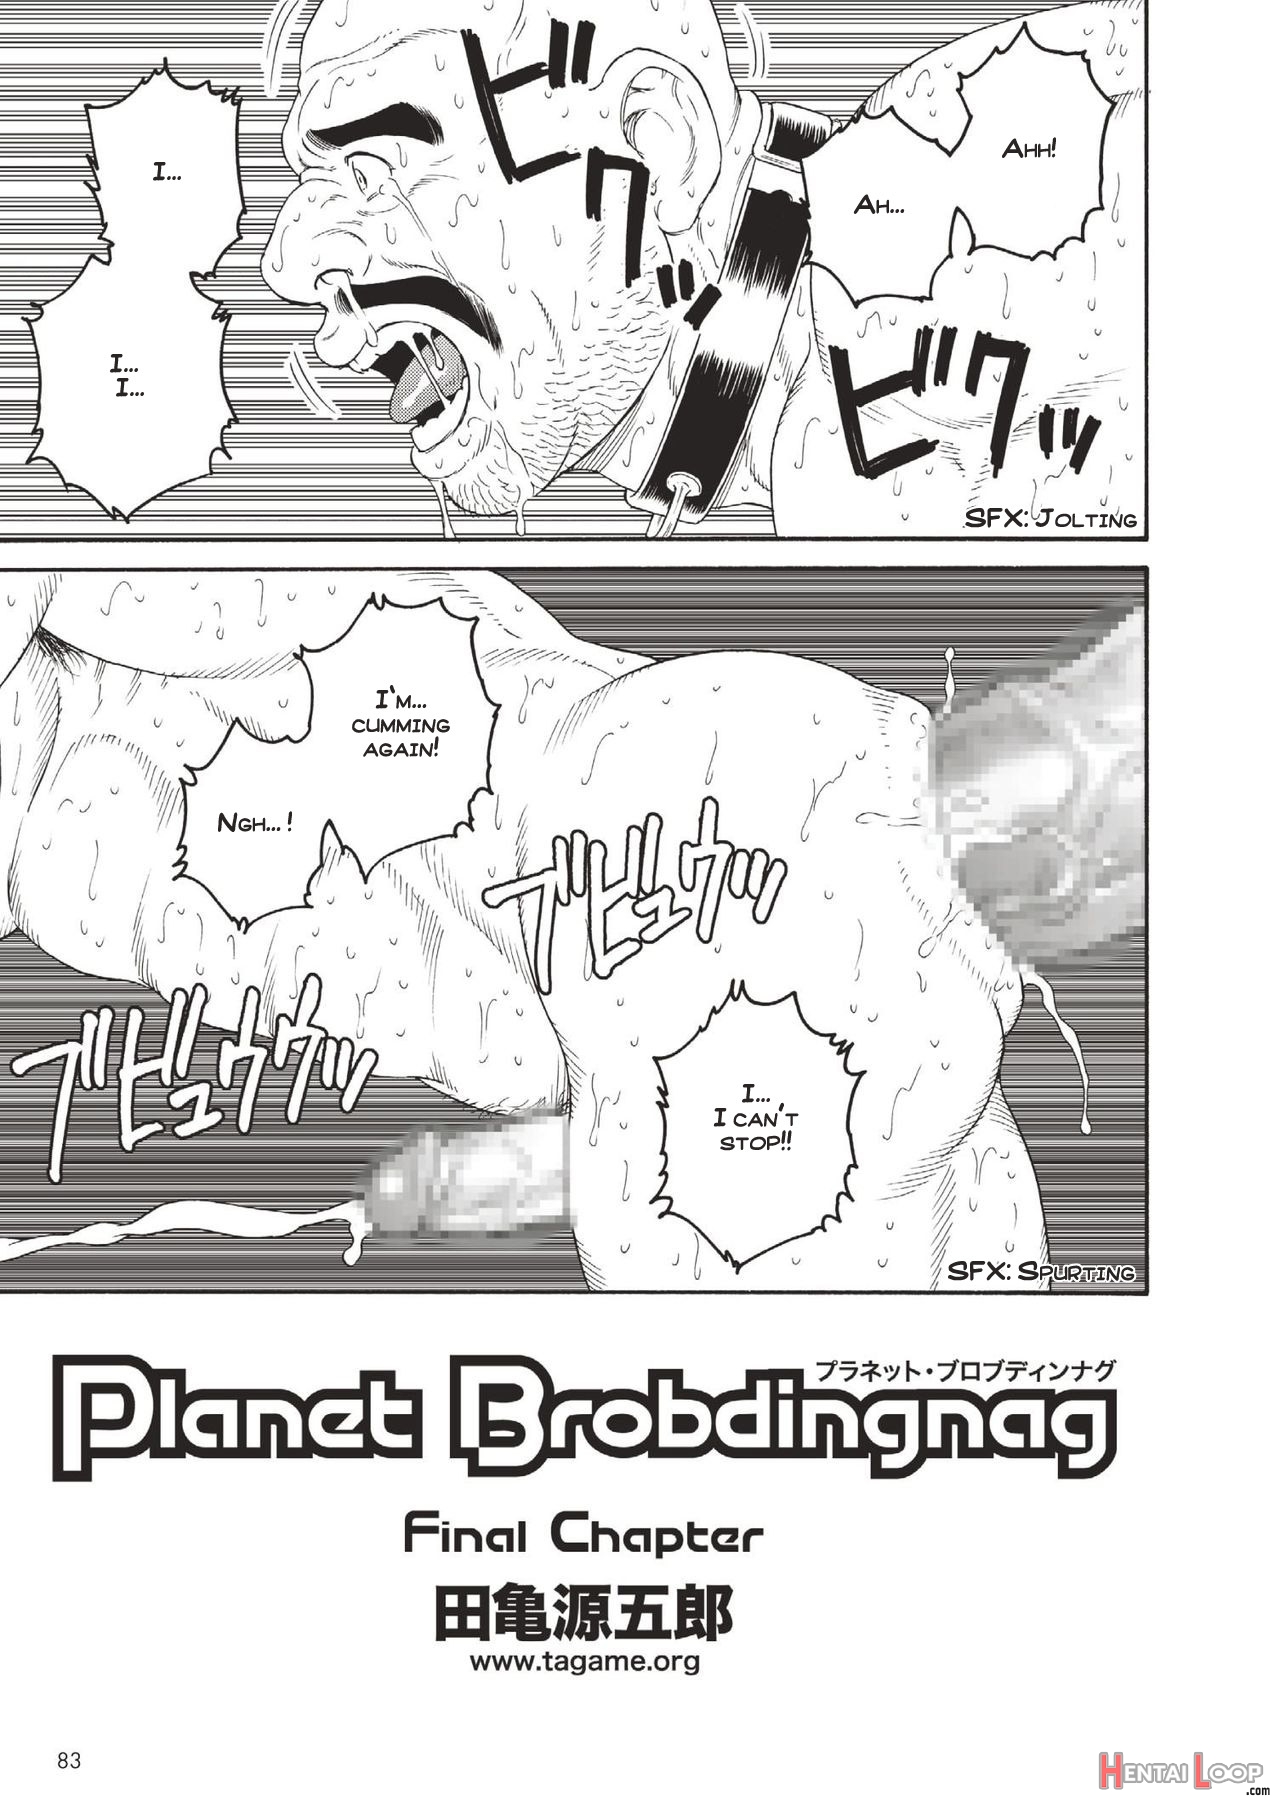 Planet Brobdingnag Final Chapter page 1